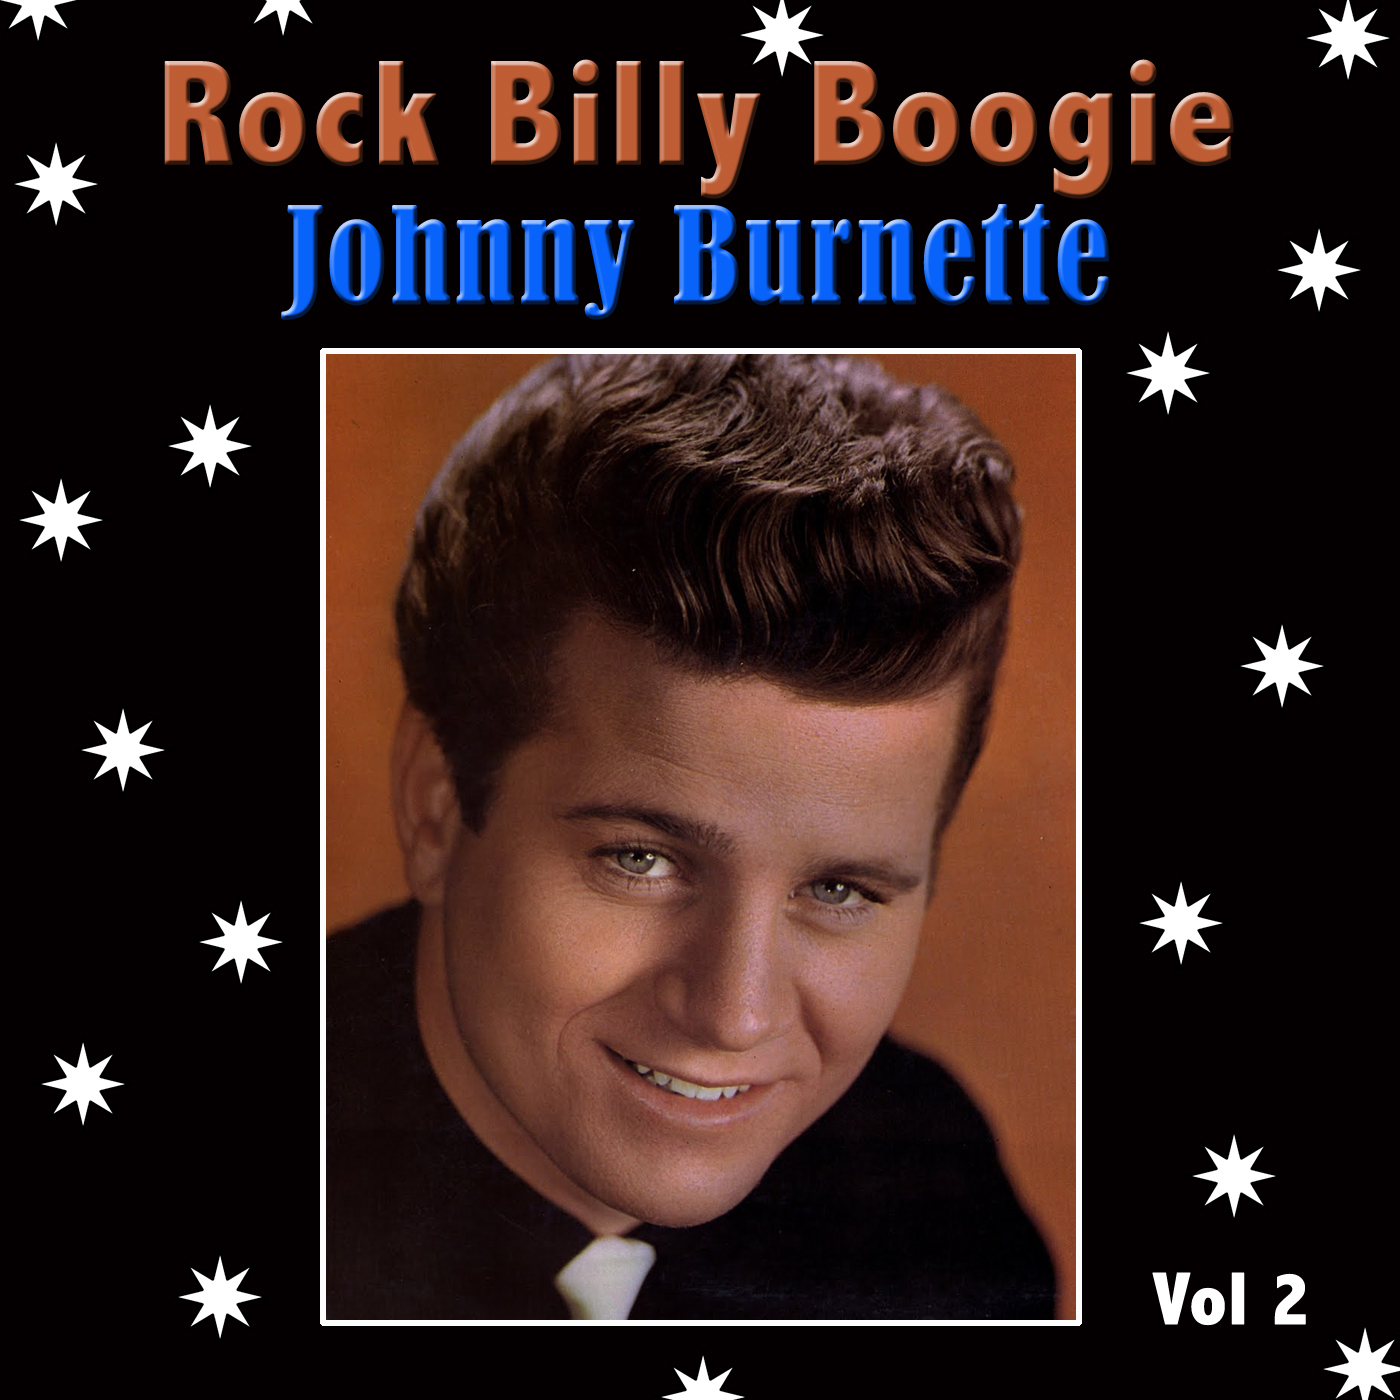 Rock Billy Boogie Vol 2